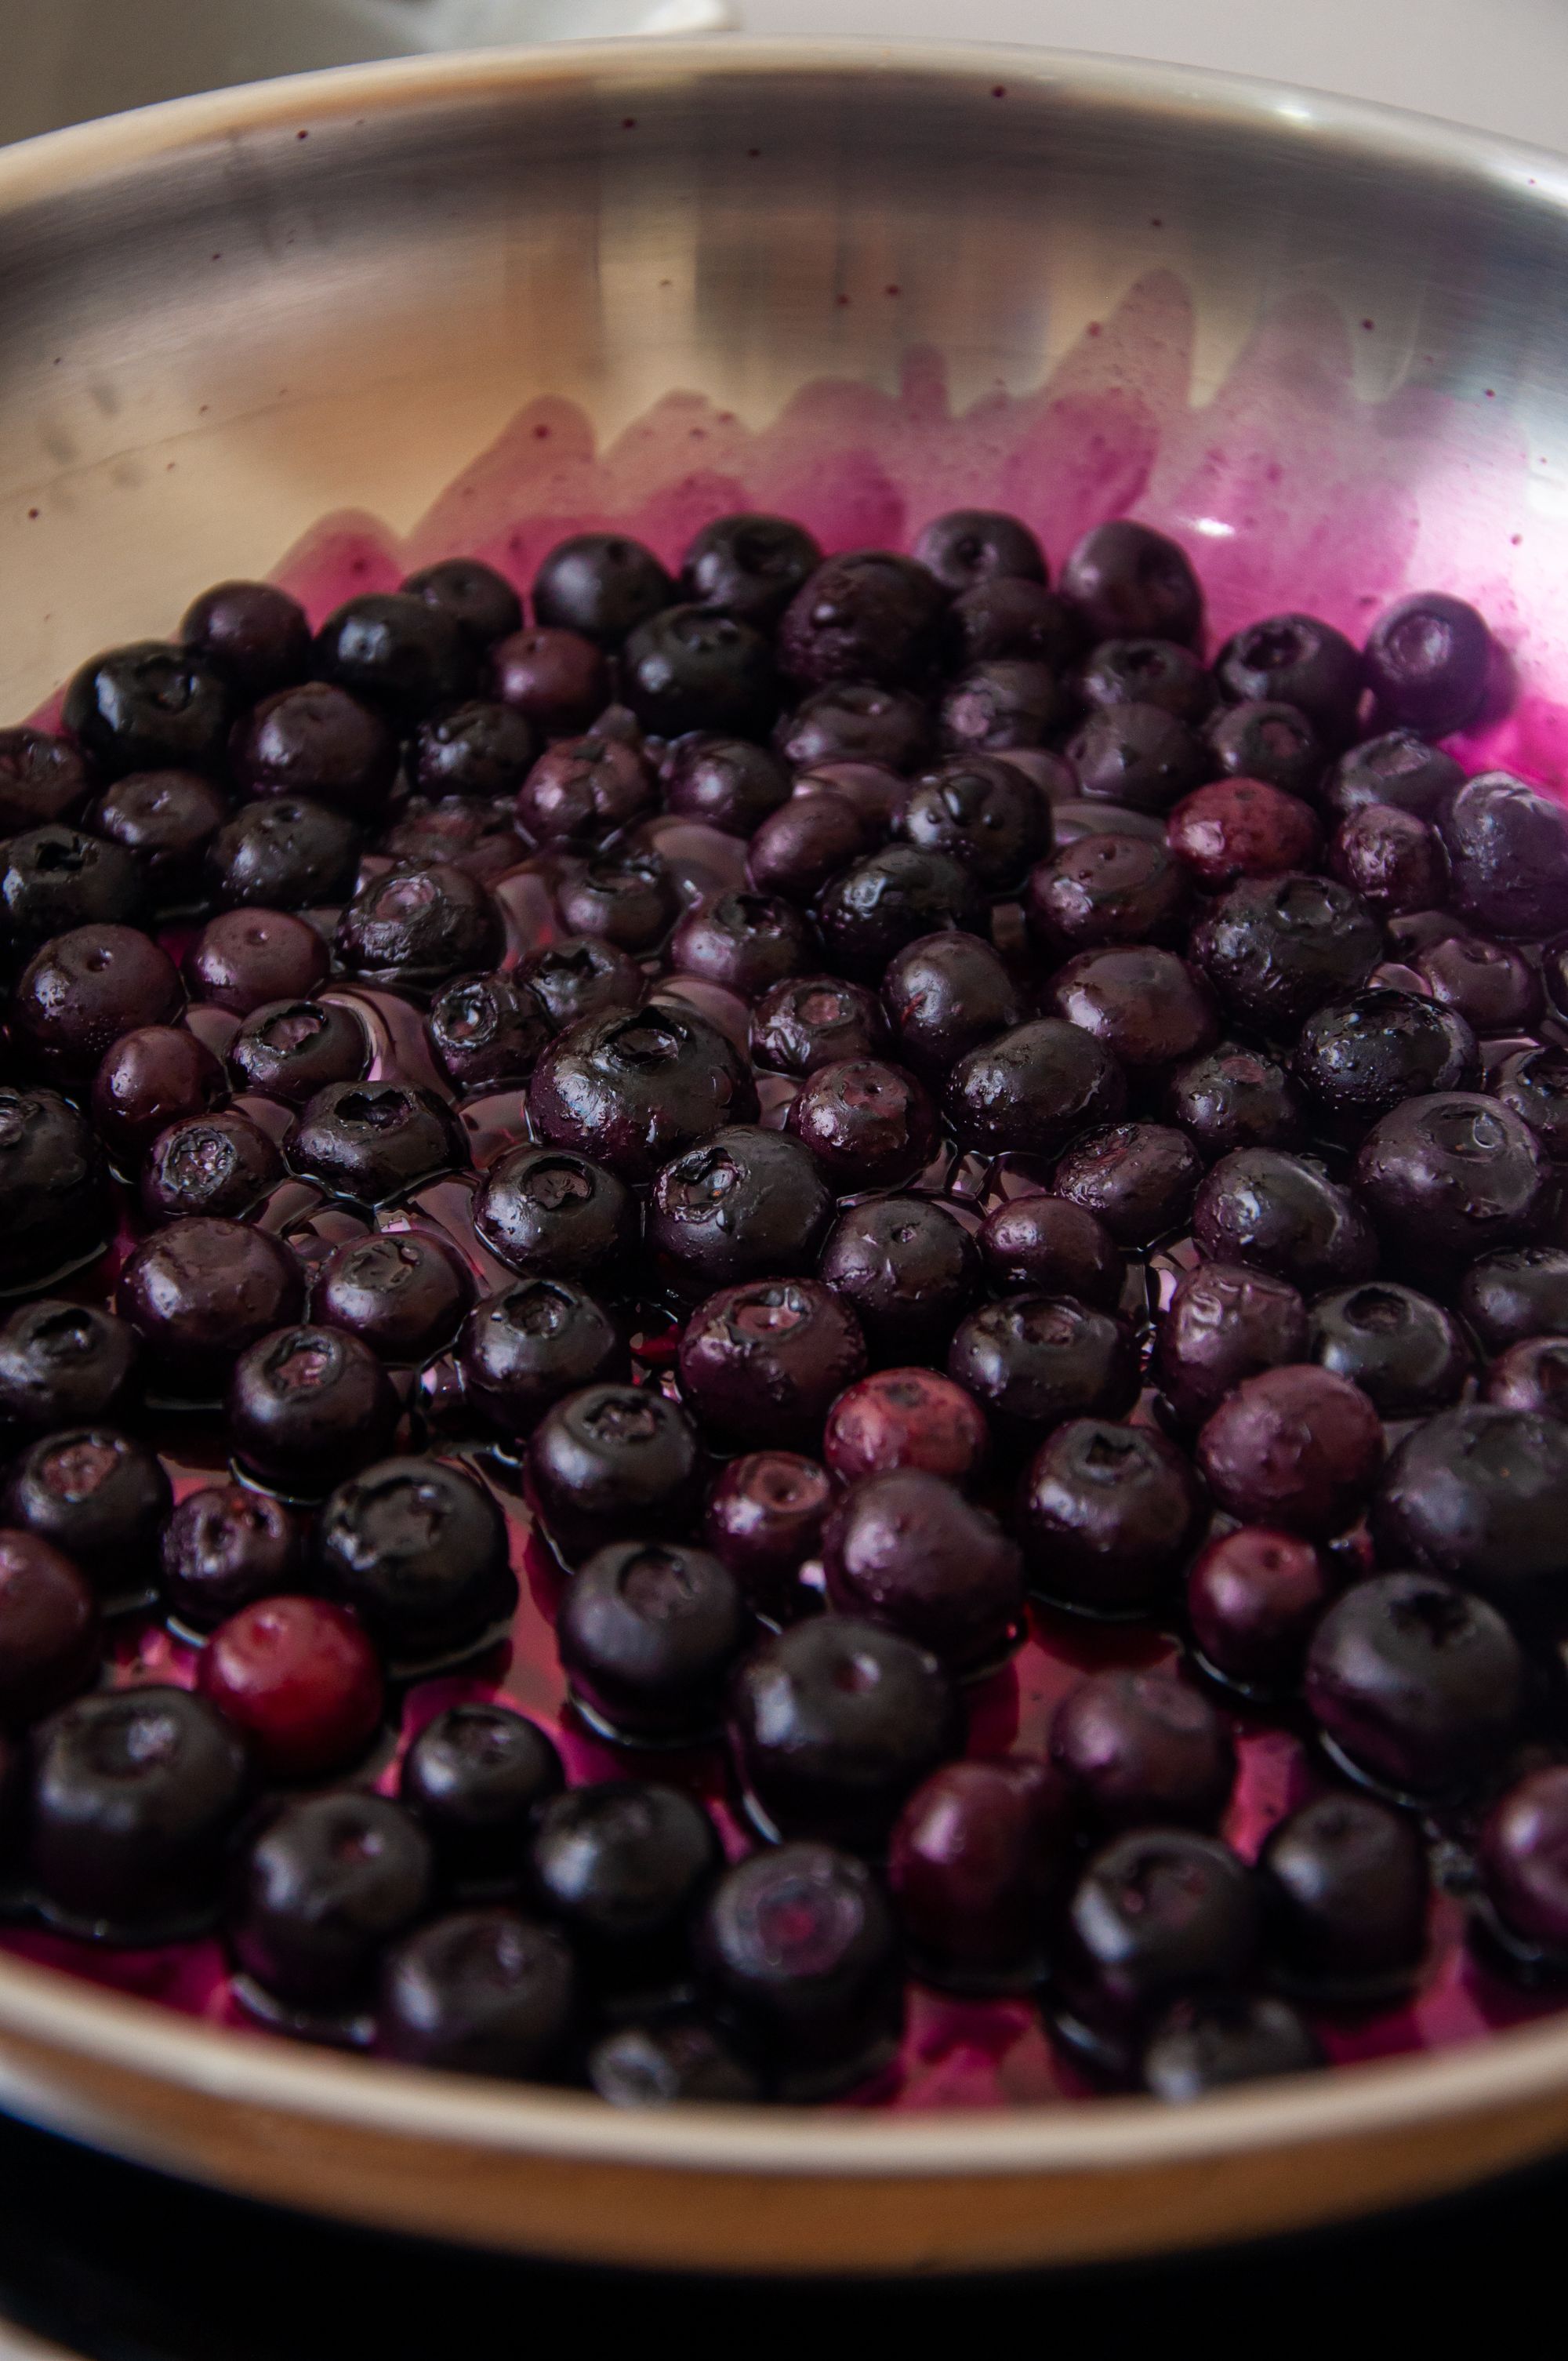 Thawing frozen blueberries